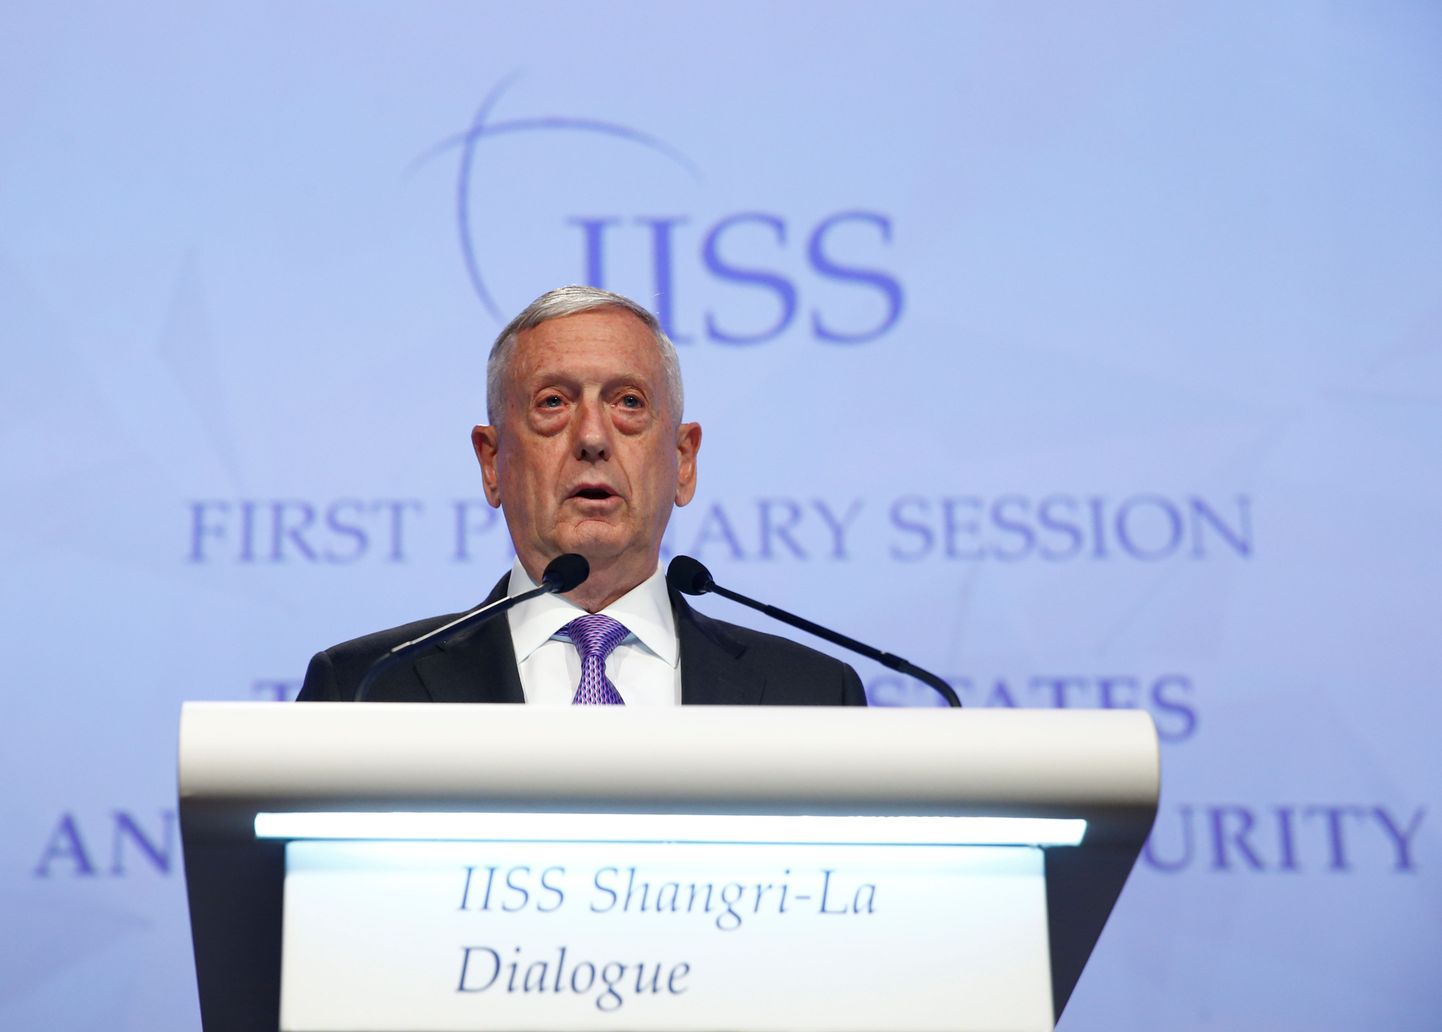 USA kaitseminister James Mattis Singapuris kõnet pidamas.